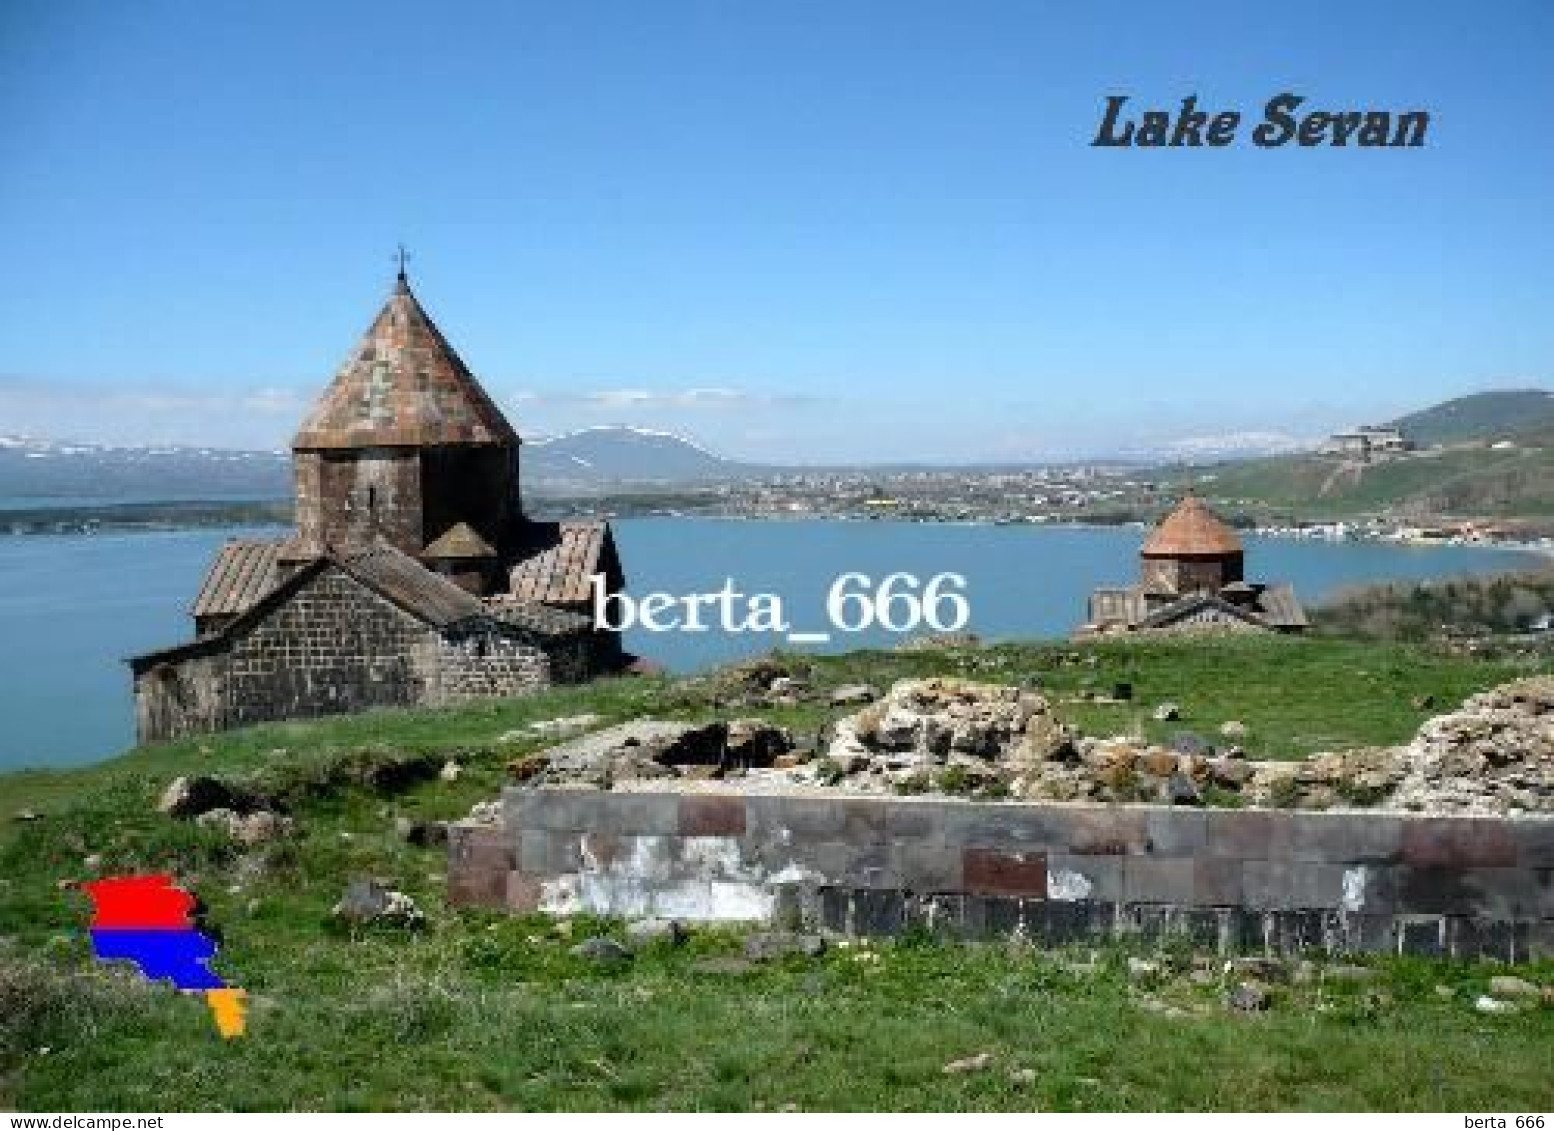 Armenia Lake Sevan Sevanavank Churches New Postcard - Armenien